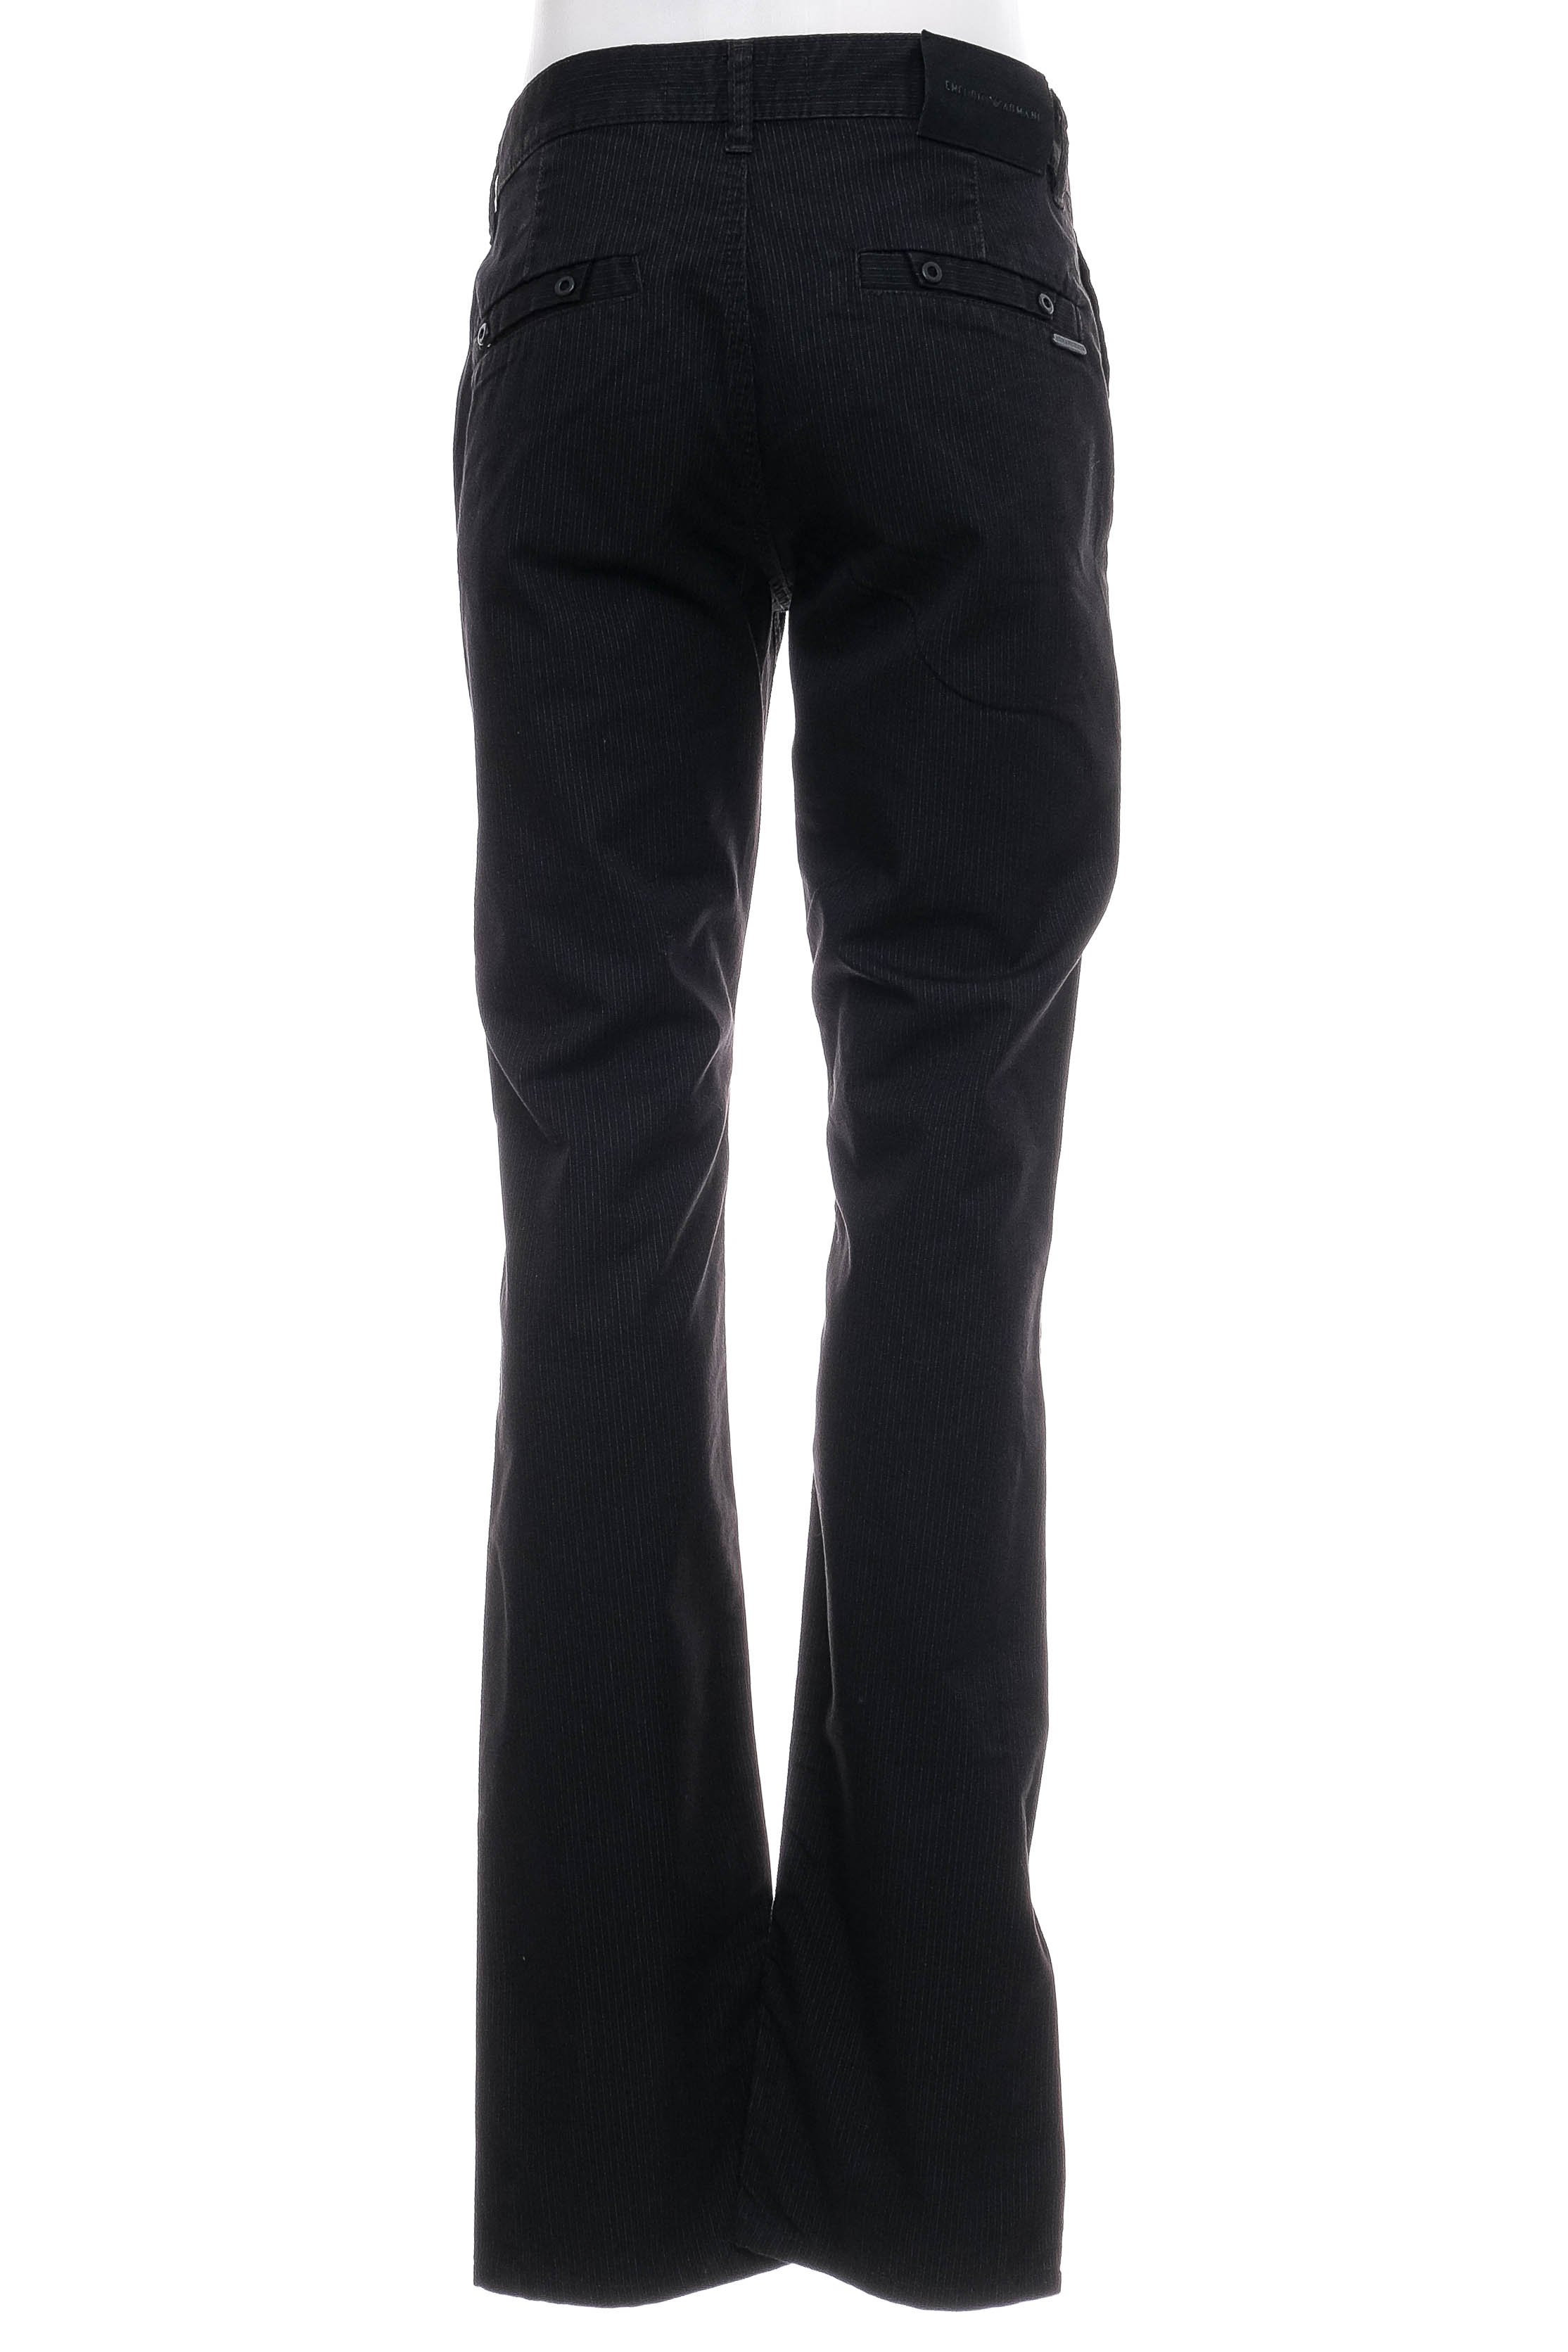 Men's trousers - Armani Jeans - 1